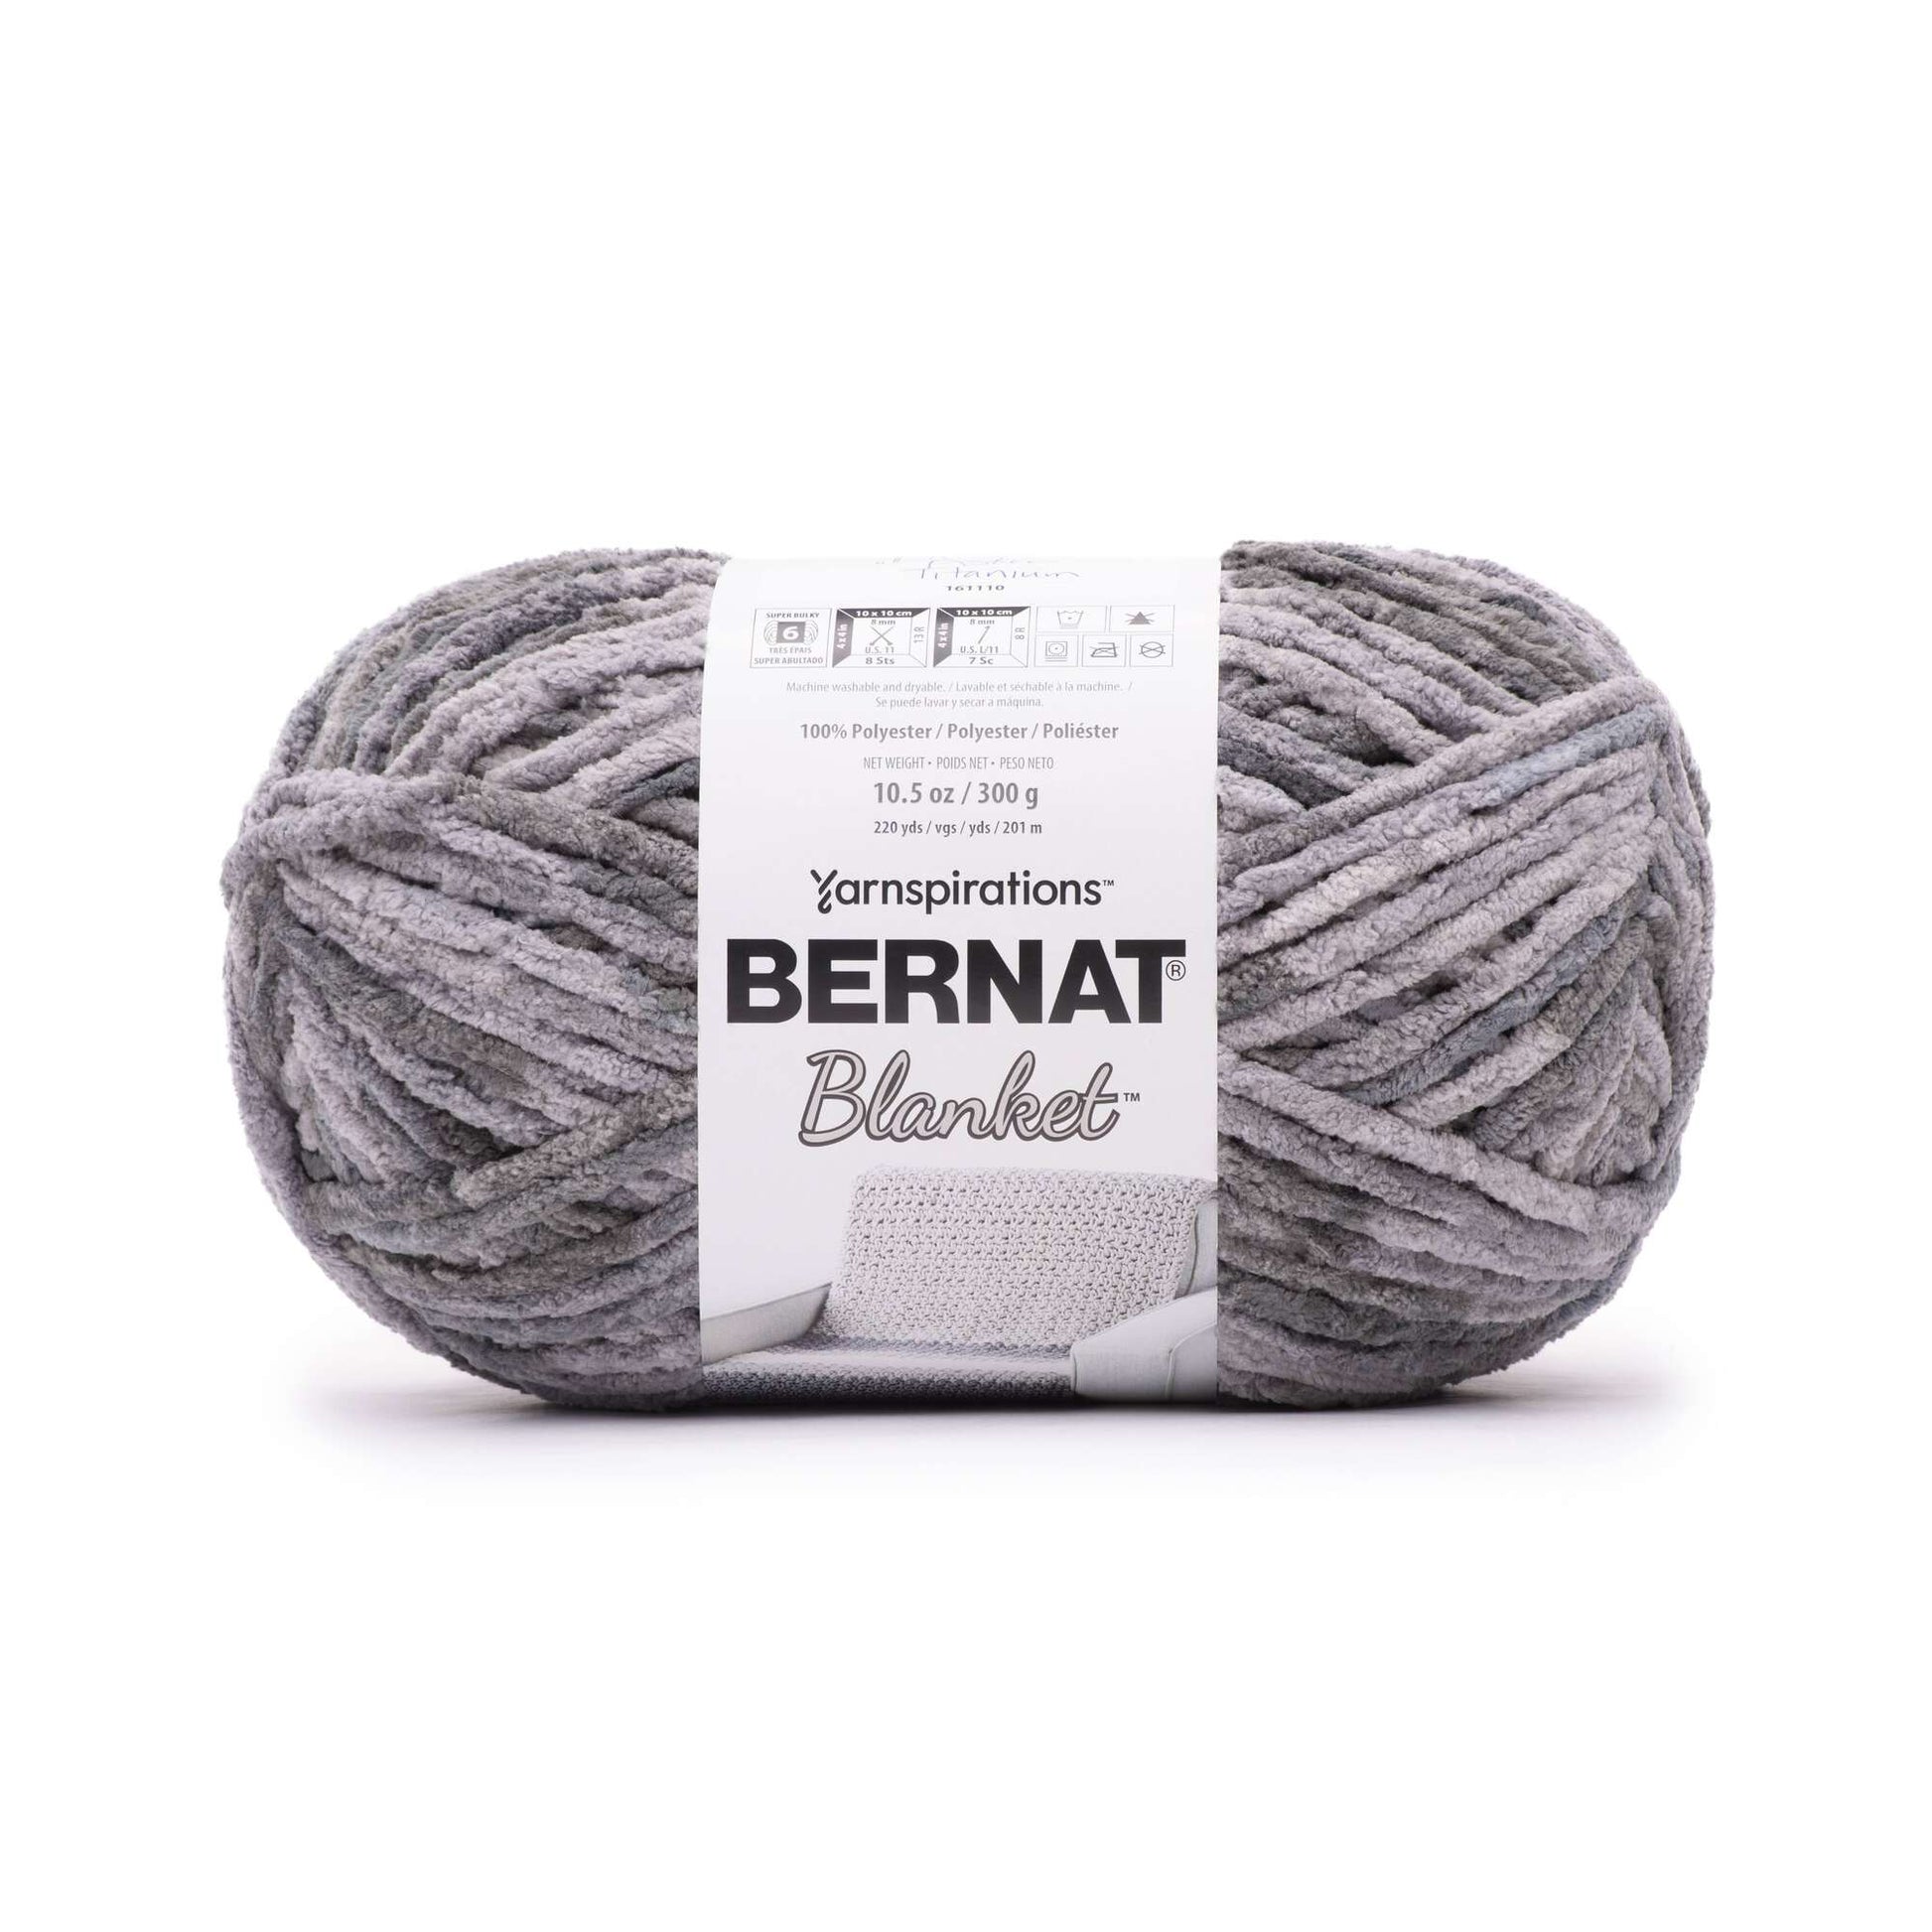 Bernat Blanket Yarn, Dark Grey - Imported Products from USA - iBhejo